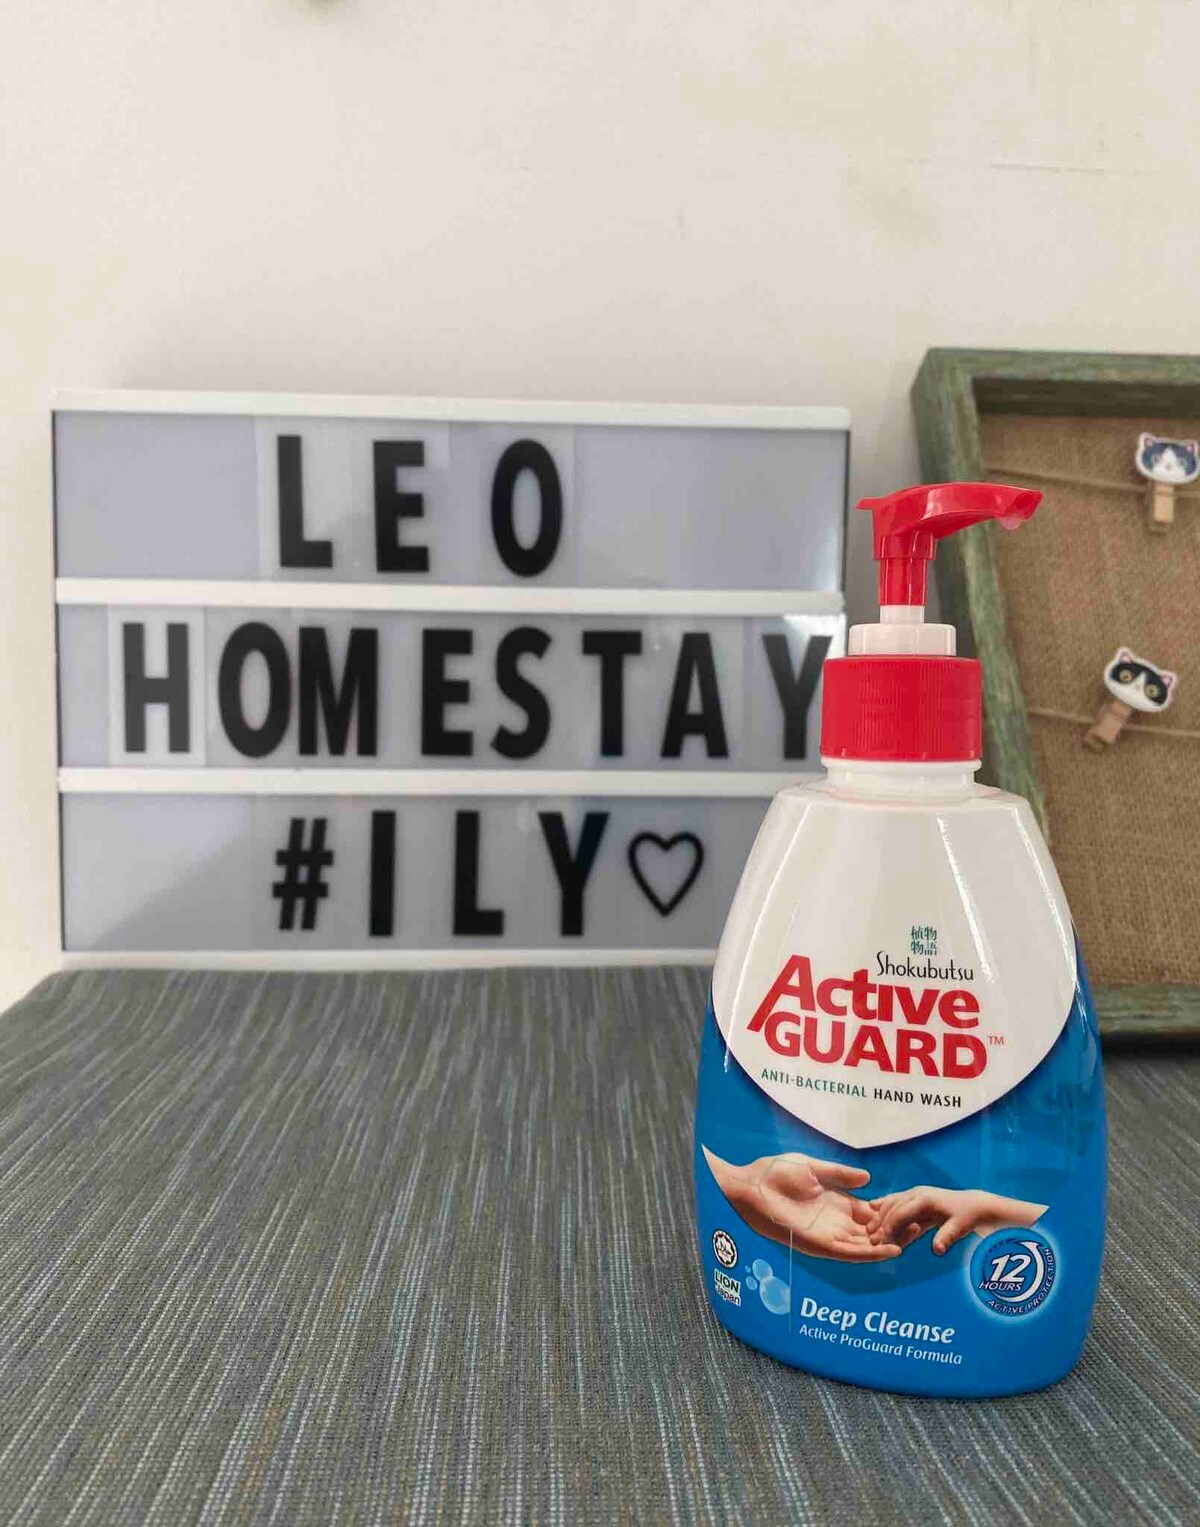 Leo 's Homestay Sitiawan